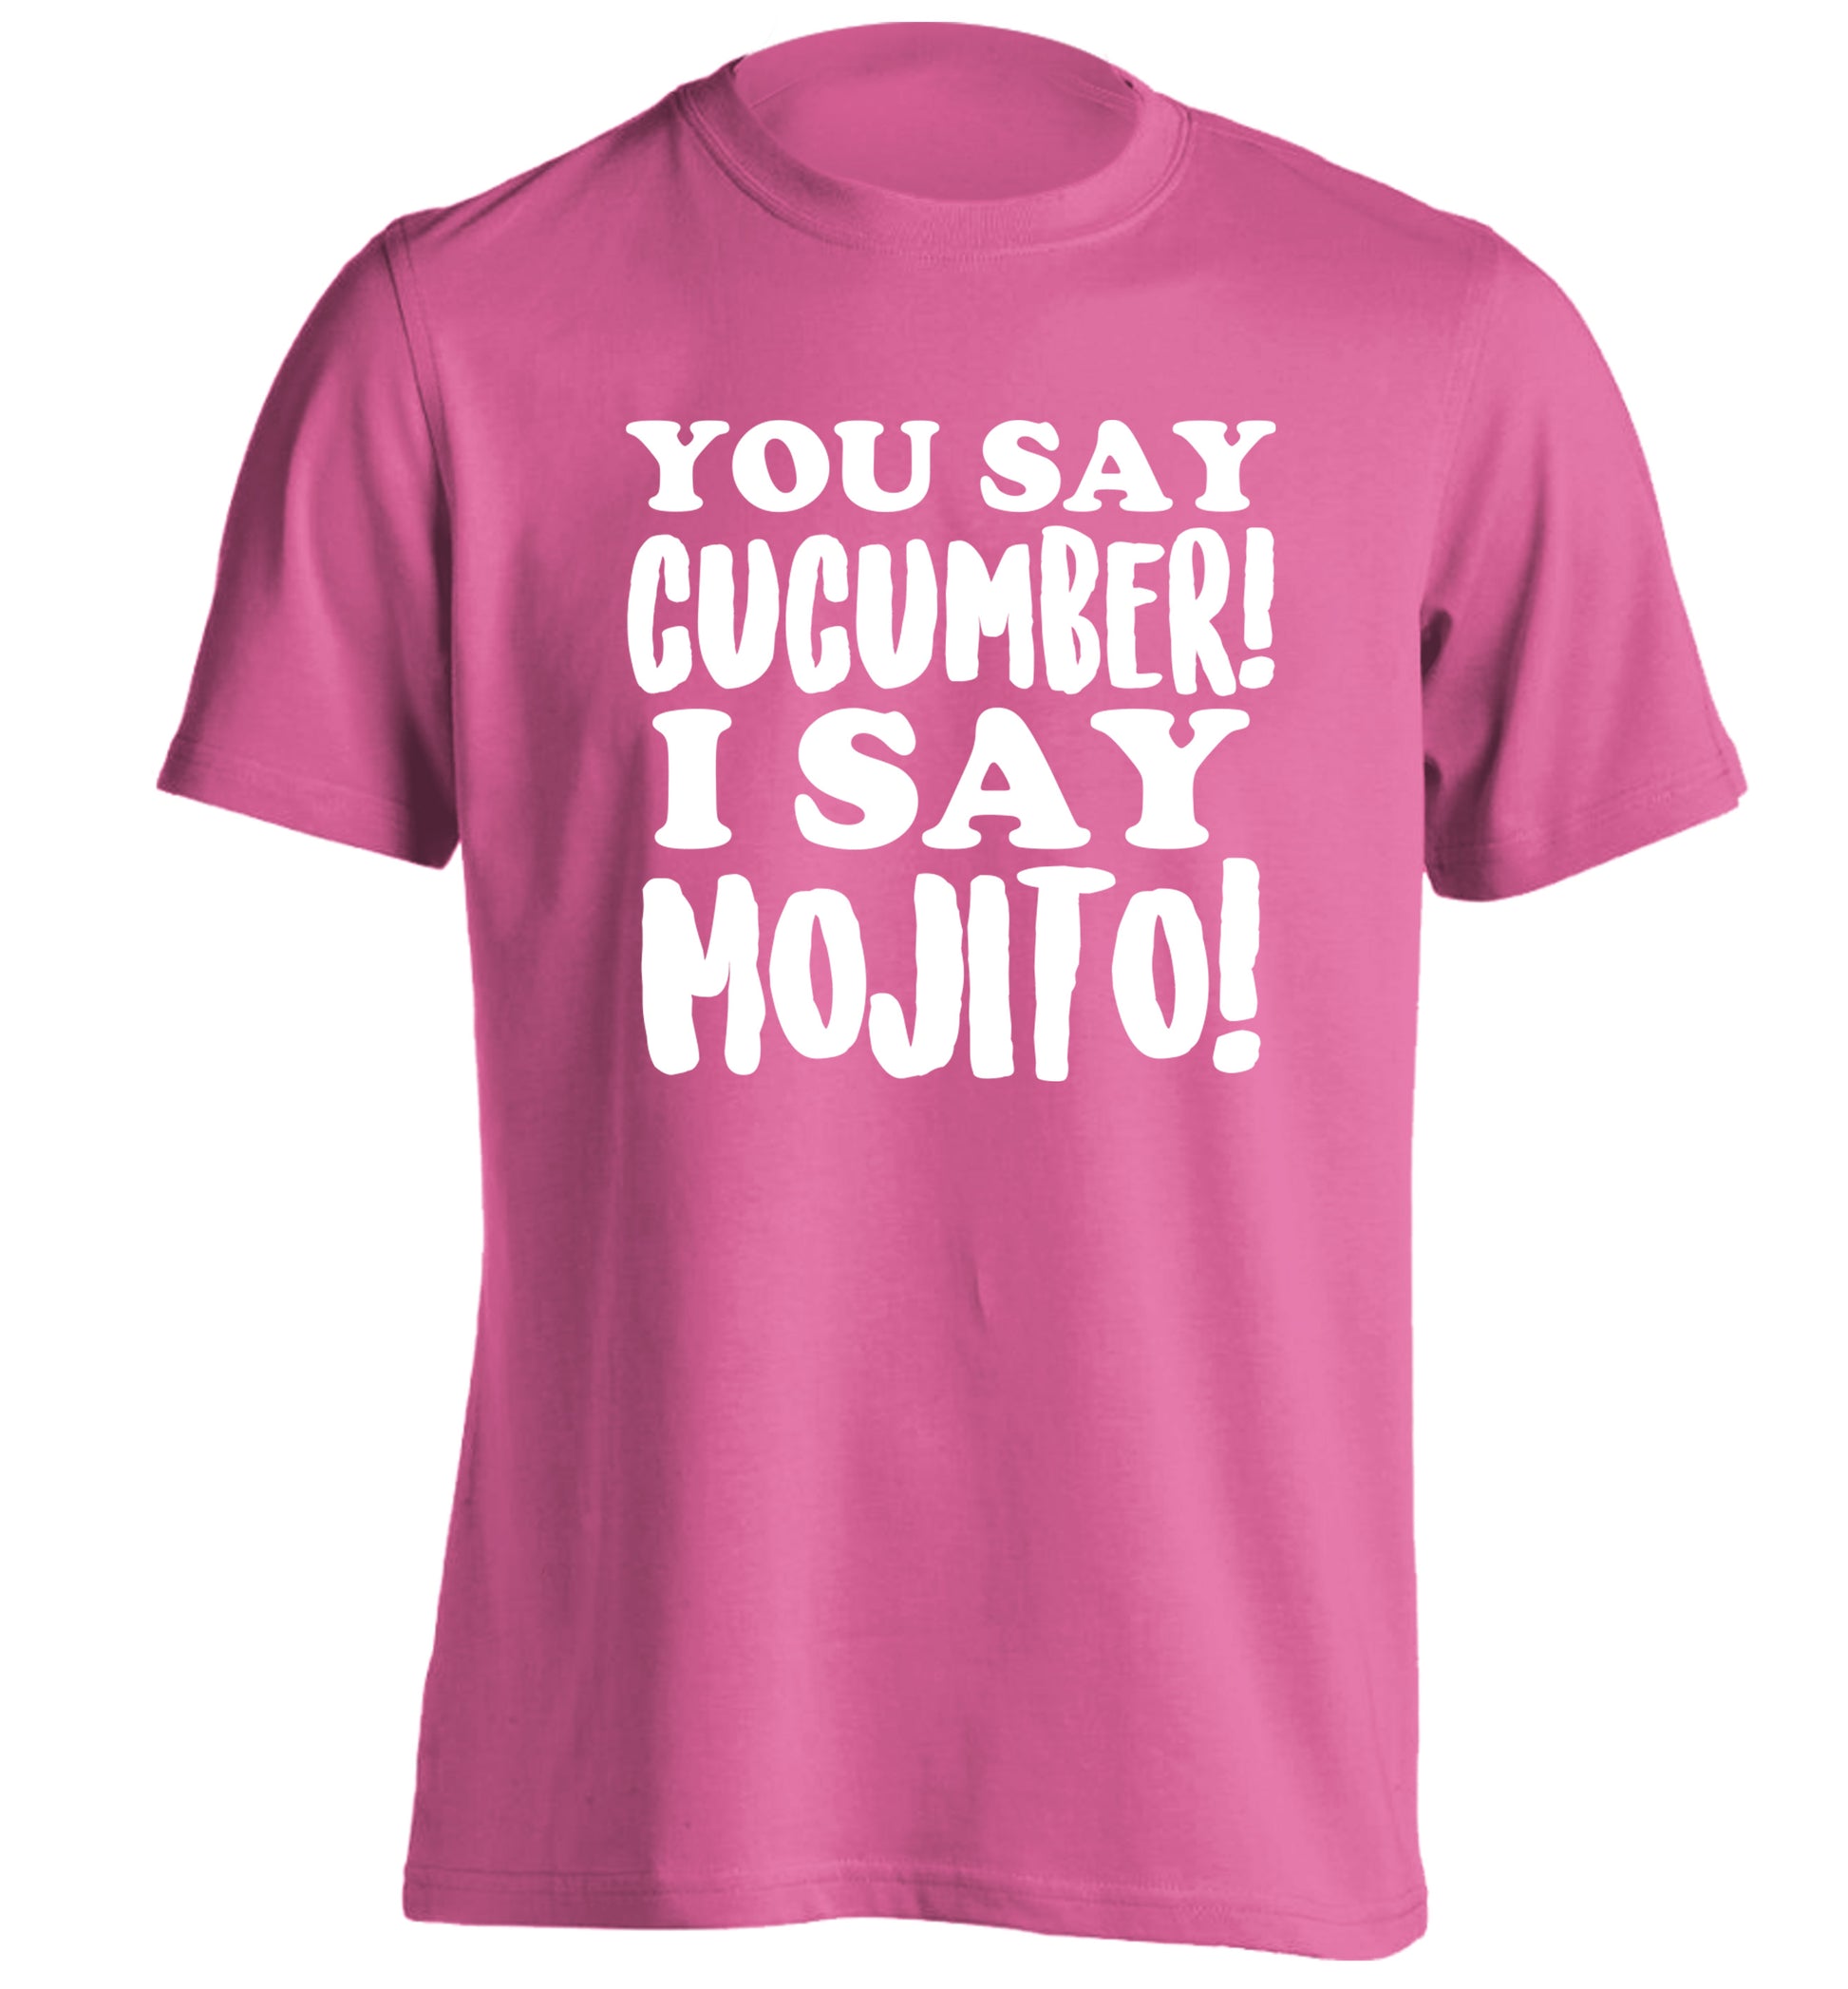 You say cucumber I say mojito! adults unisex pink Tshirt 2XL